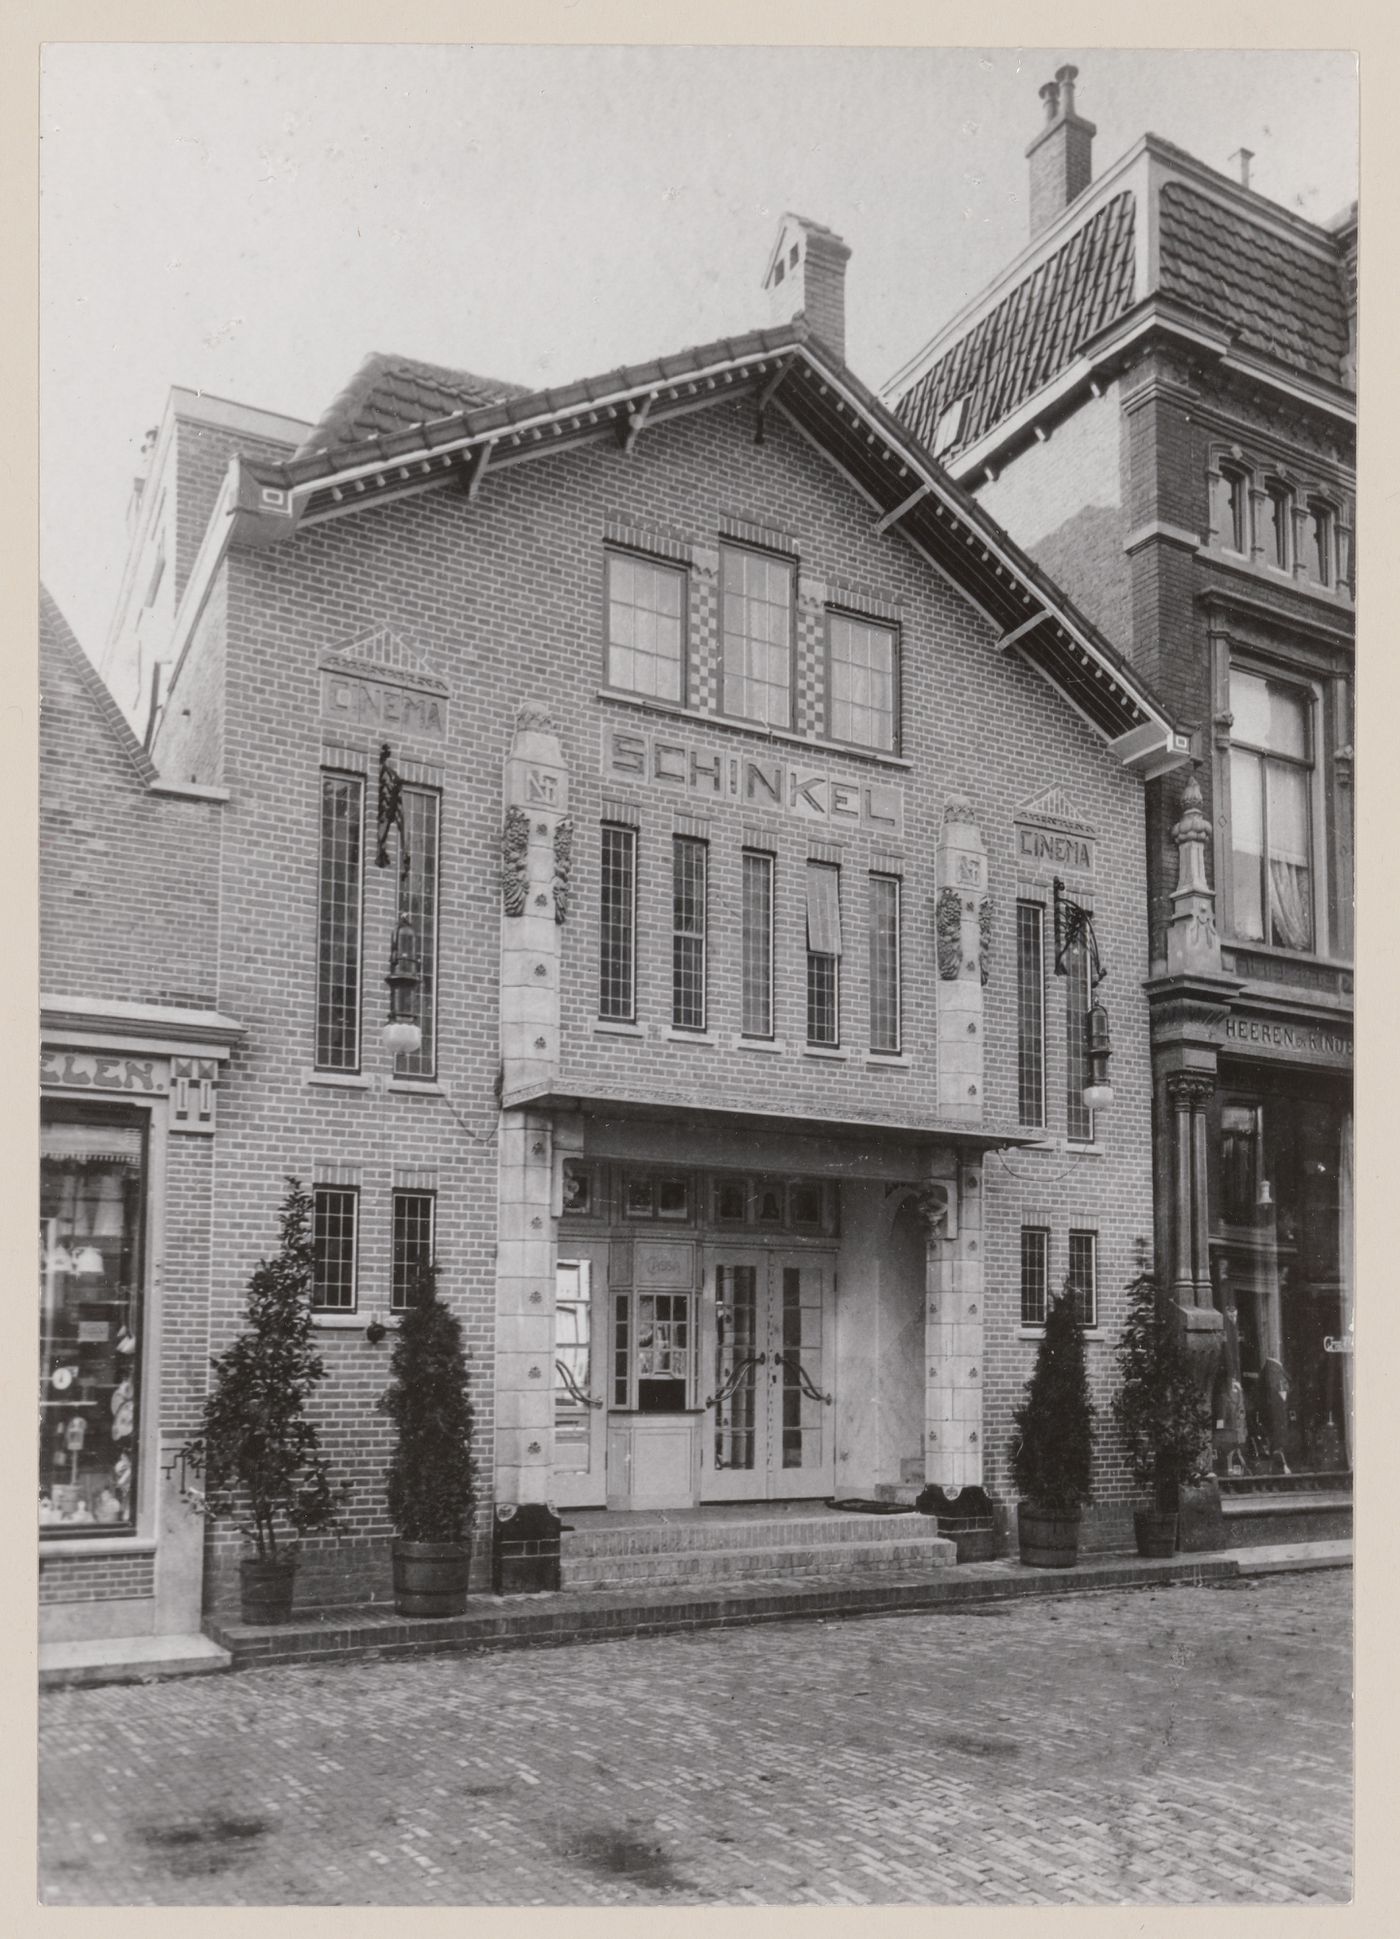 View of the principal façade of Schinkel Cinema, Purmerend, Netherlands